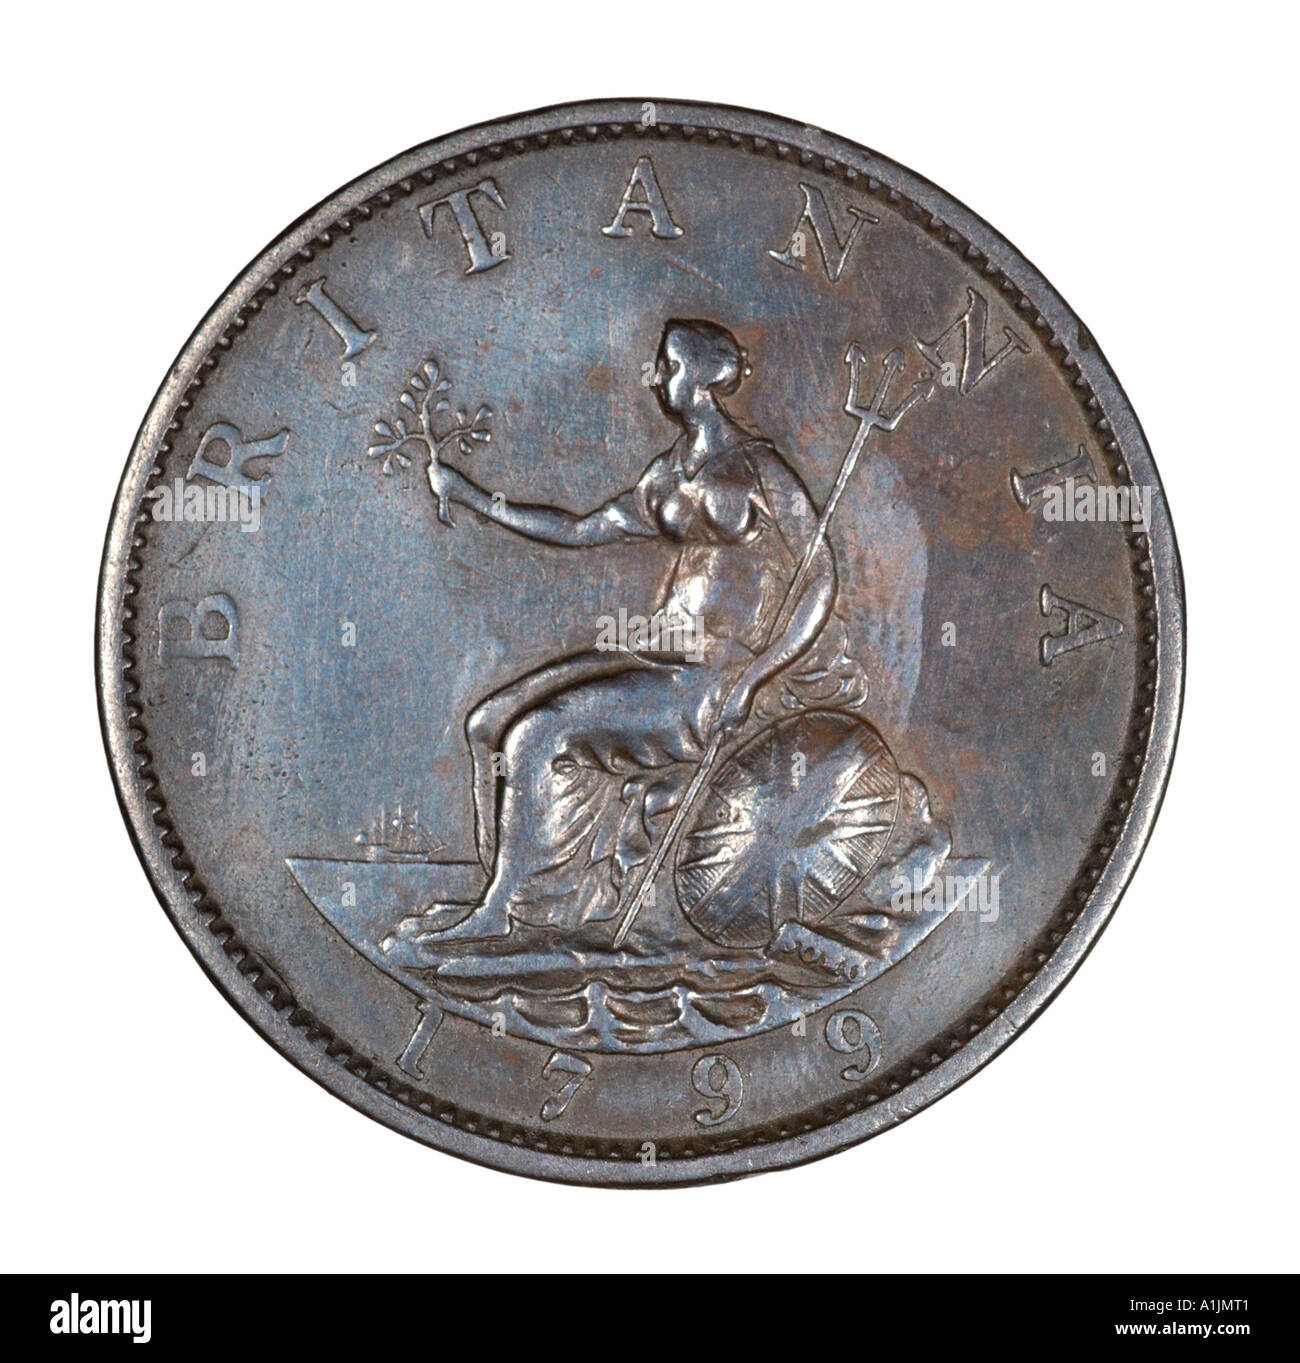 König George III 3 Reg Fid Def Pre Dezimal halben Penny alte Pence P 1799 Kupfer hell Britannia Schild Trident Meer Helm Flagge Stockfoto